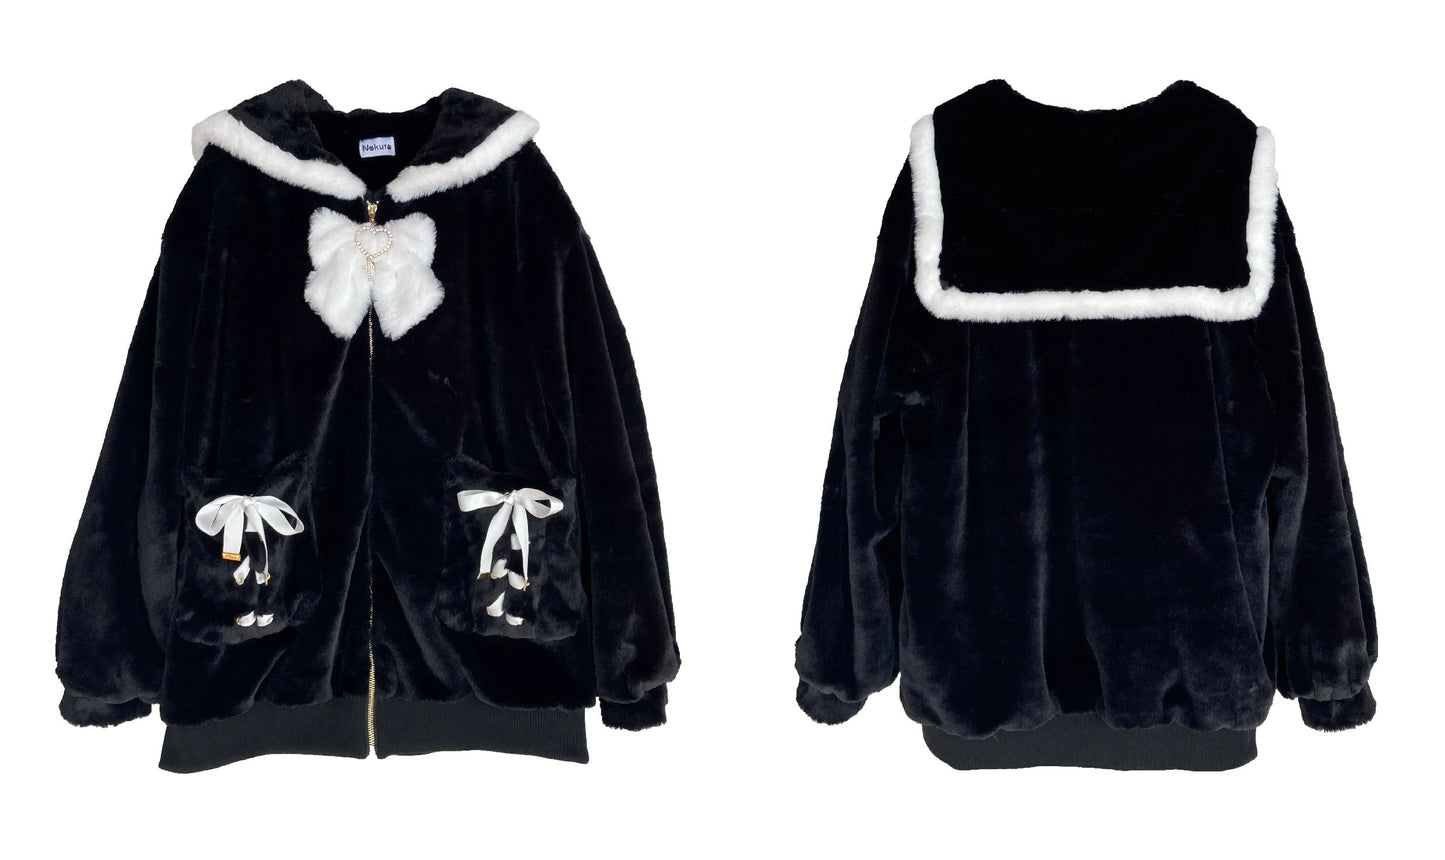 Black Jirai Kei Coat Ryousangata Imitation Rabbit Fur Coat (M) 33304:446234